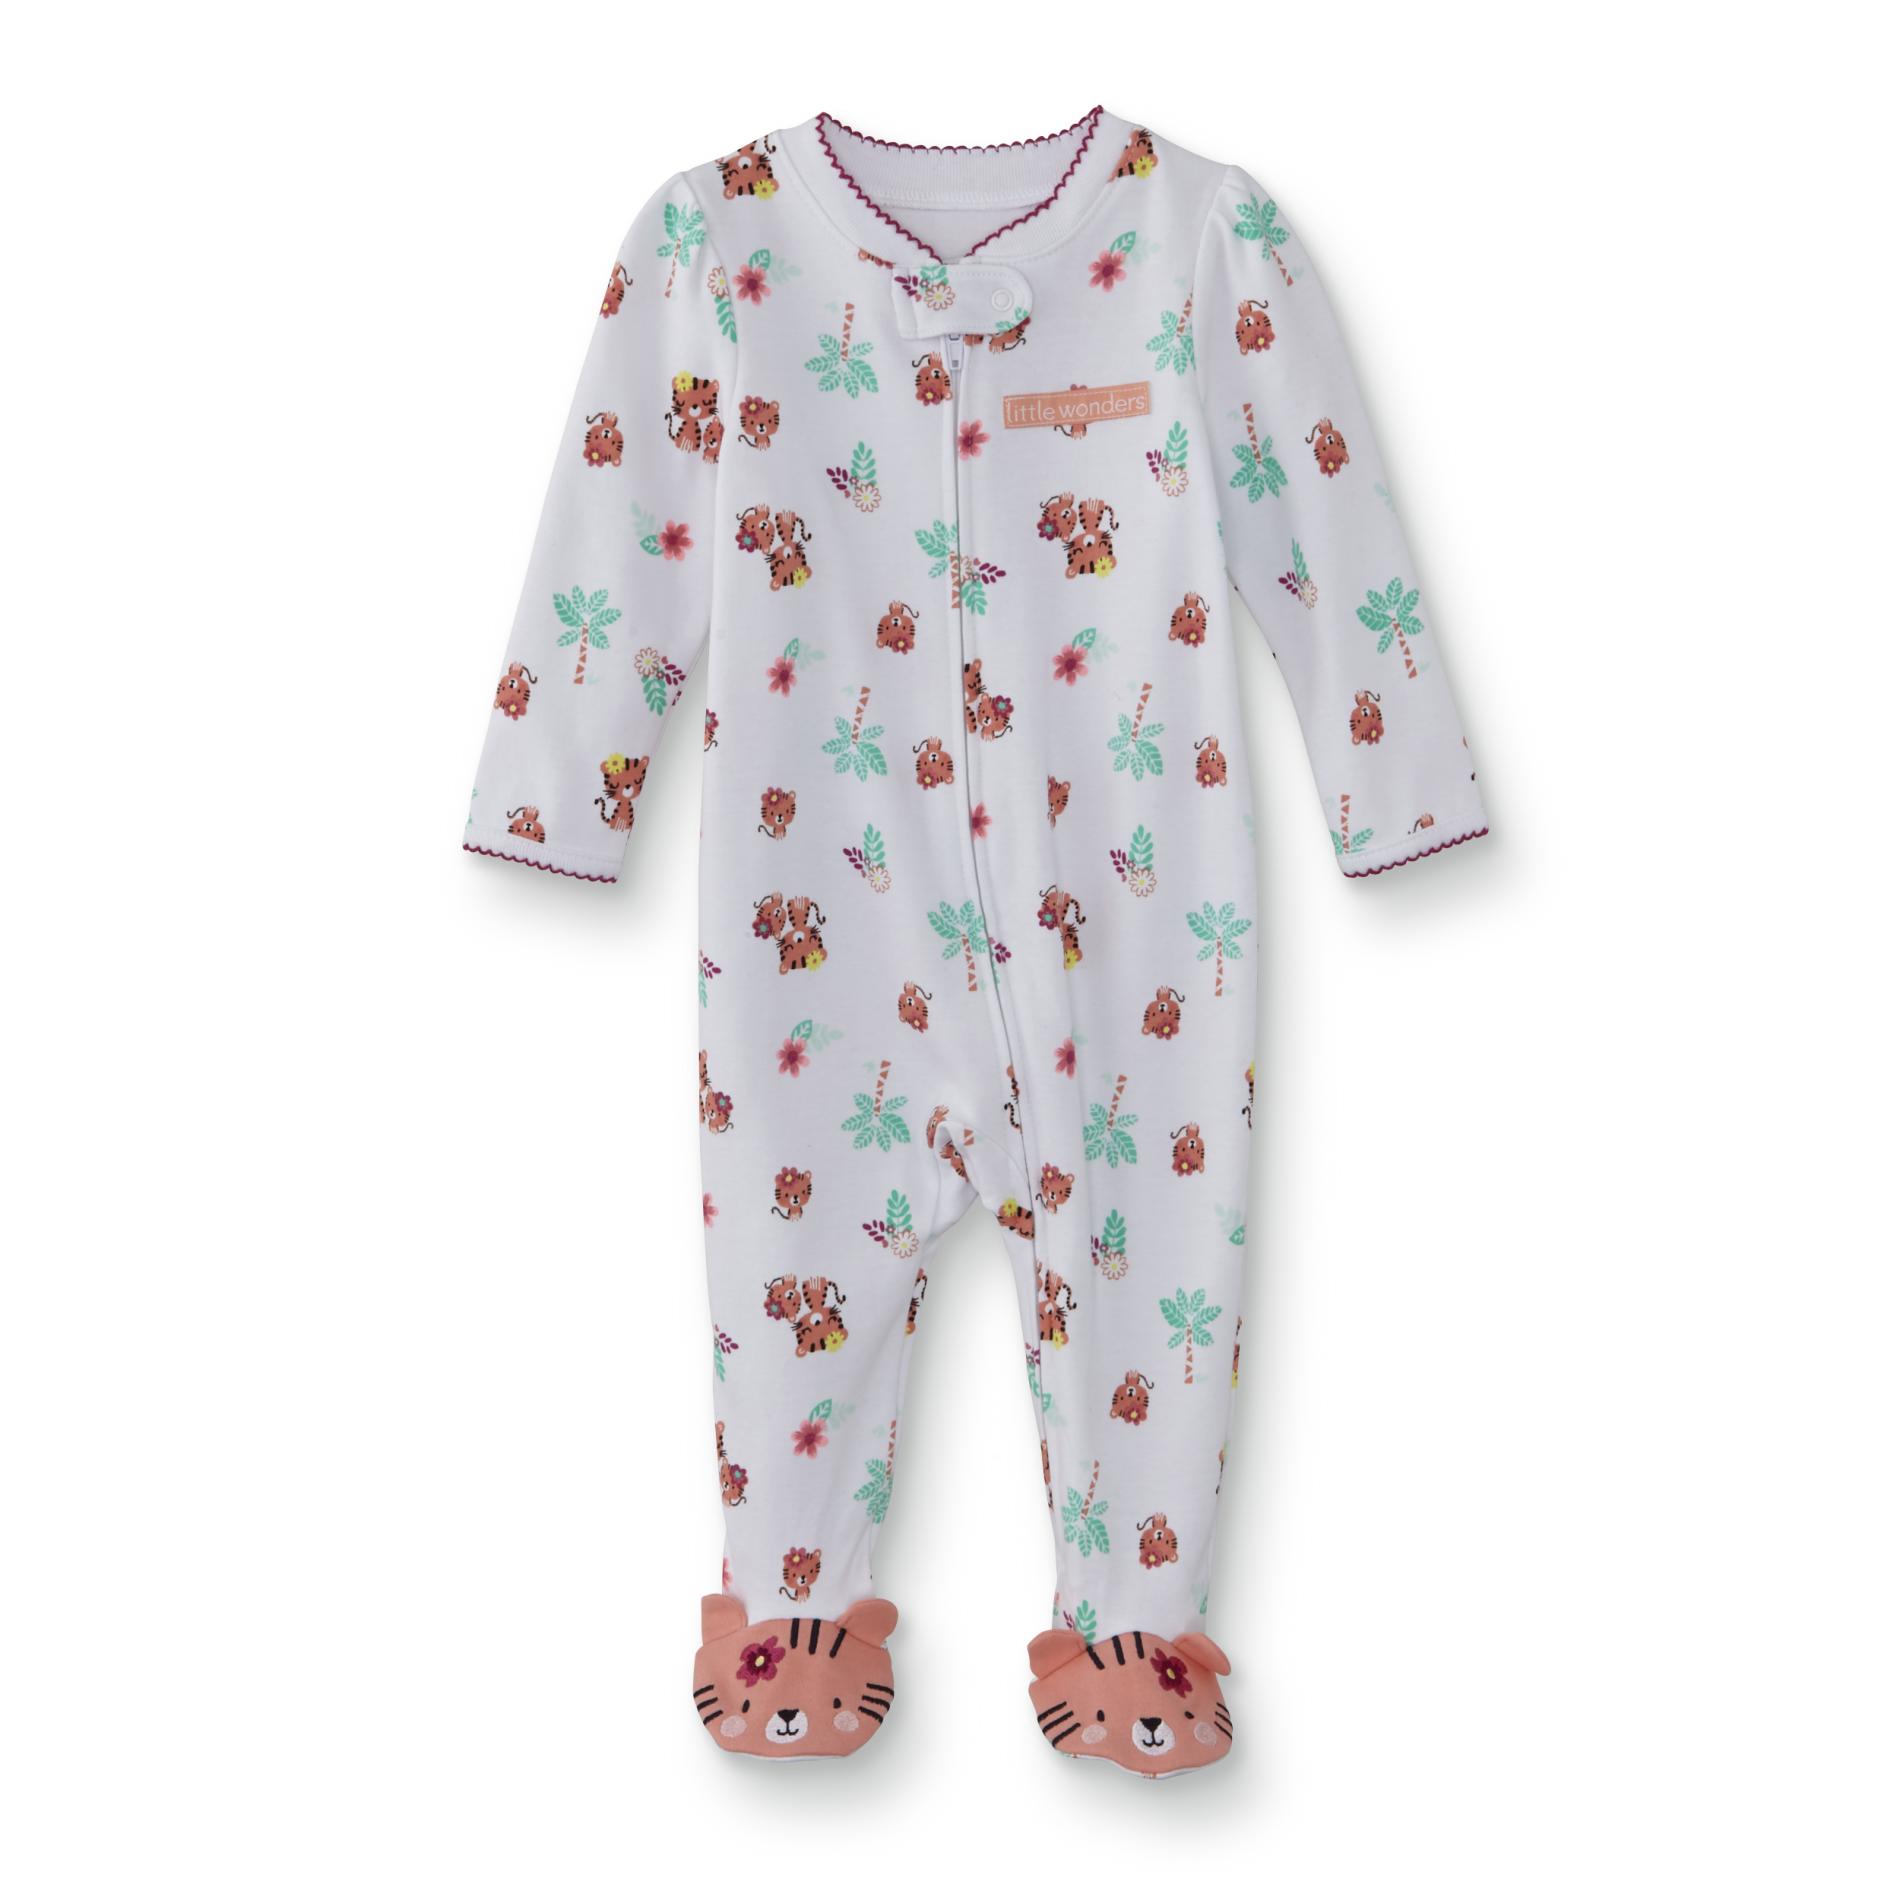 Little Wonders Infant Girls' Sleeper Pajamas - Tiger